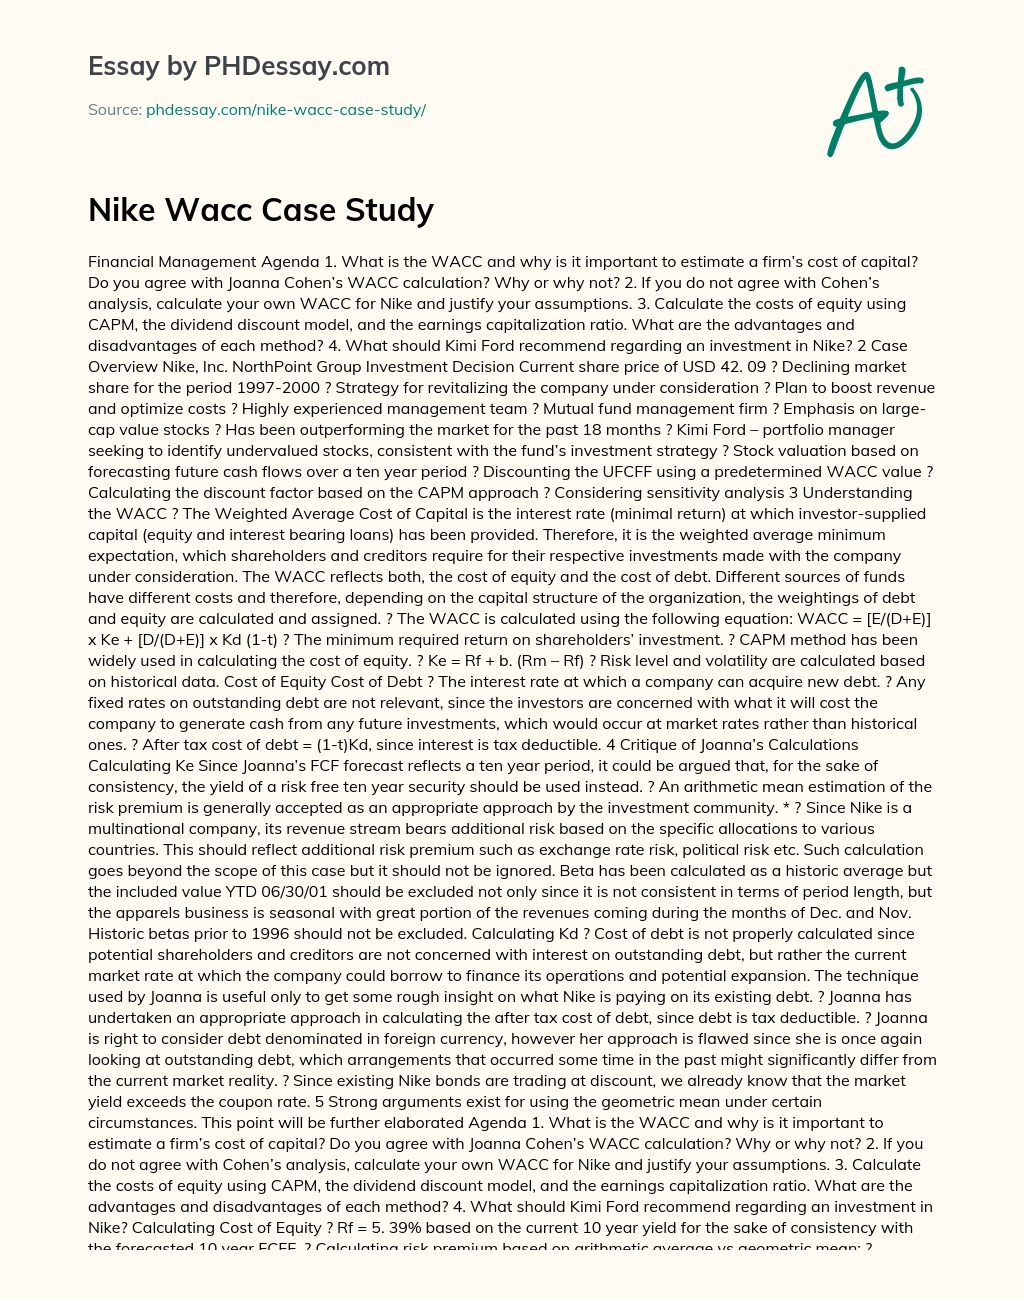 Nike Wacc Case Study essay